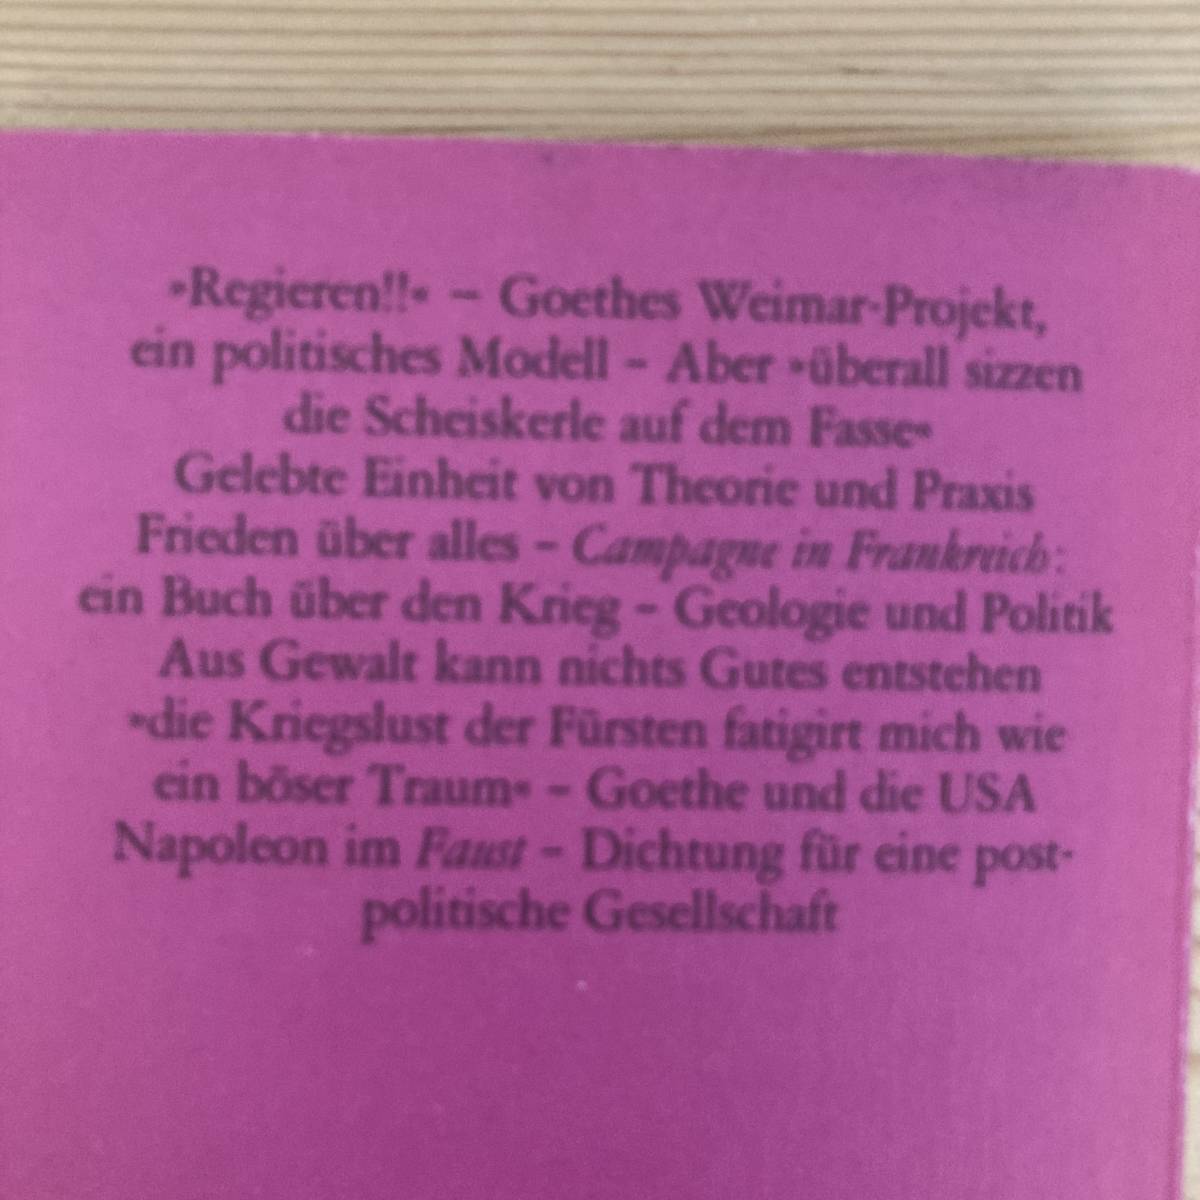 【独語洋書】Wie die Grossen mit den Menschen spielen: Goethes Politik / Ekkehart Krippendorff（著）【ゲーテ】_画像2